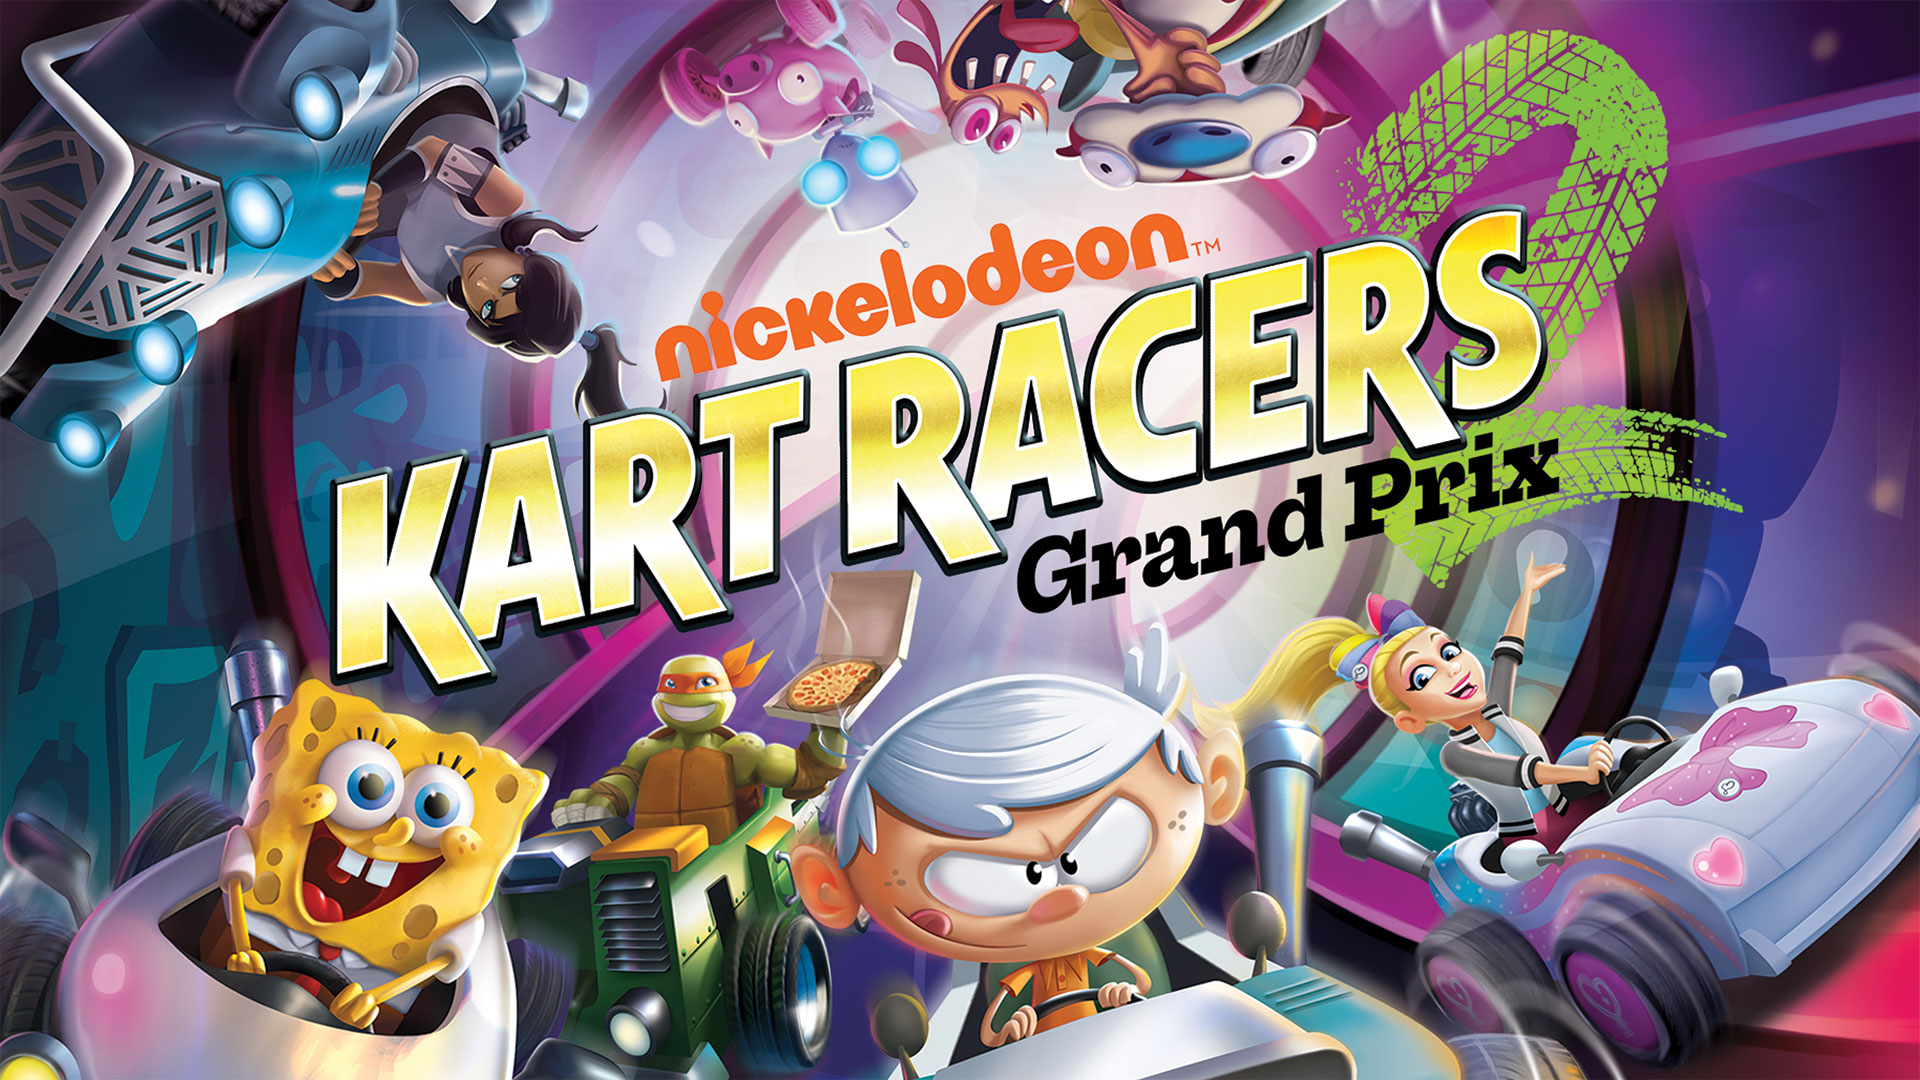 download nickelodeon kart racers 2 grand prix for free